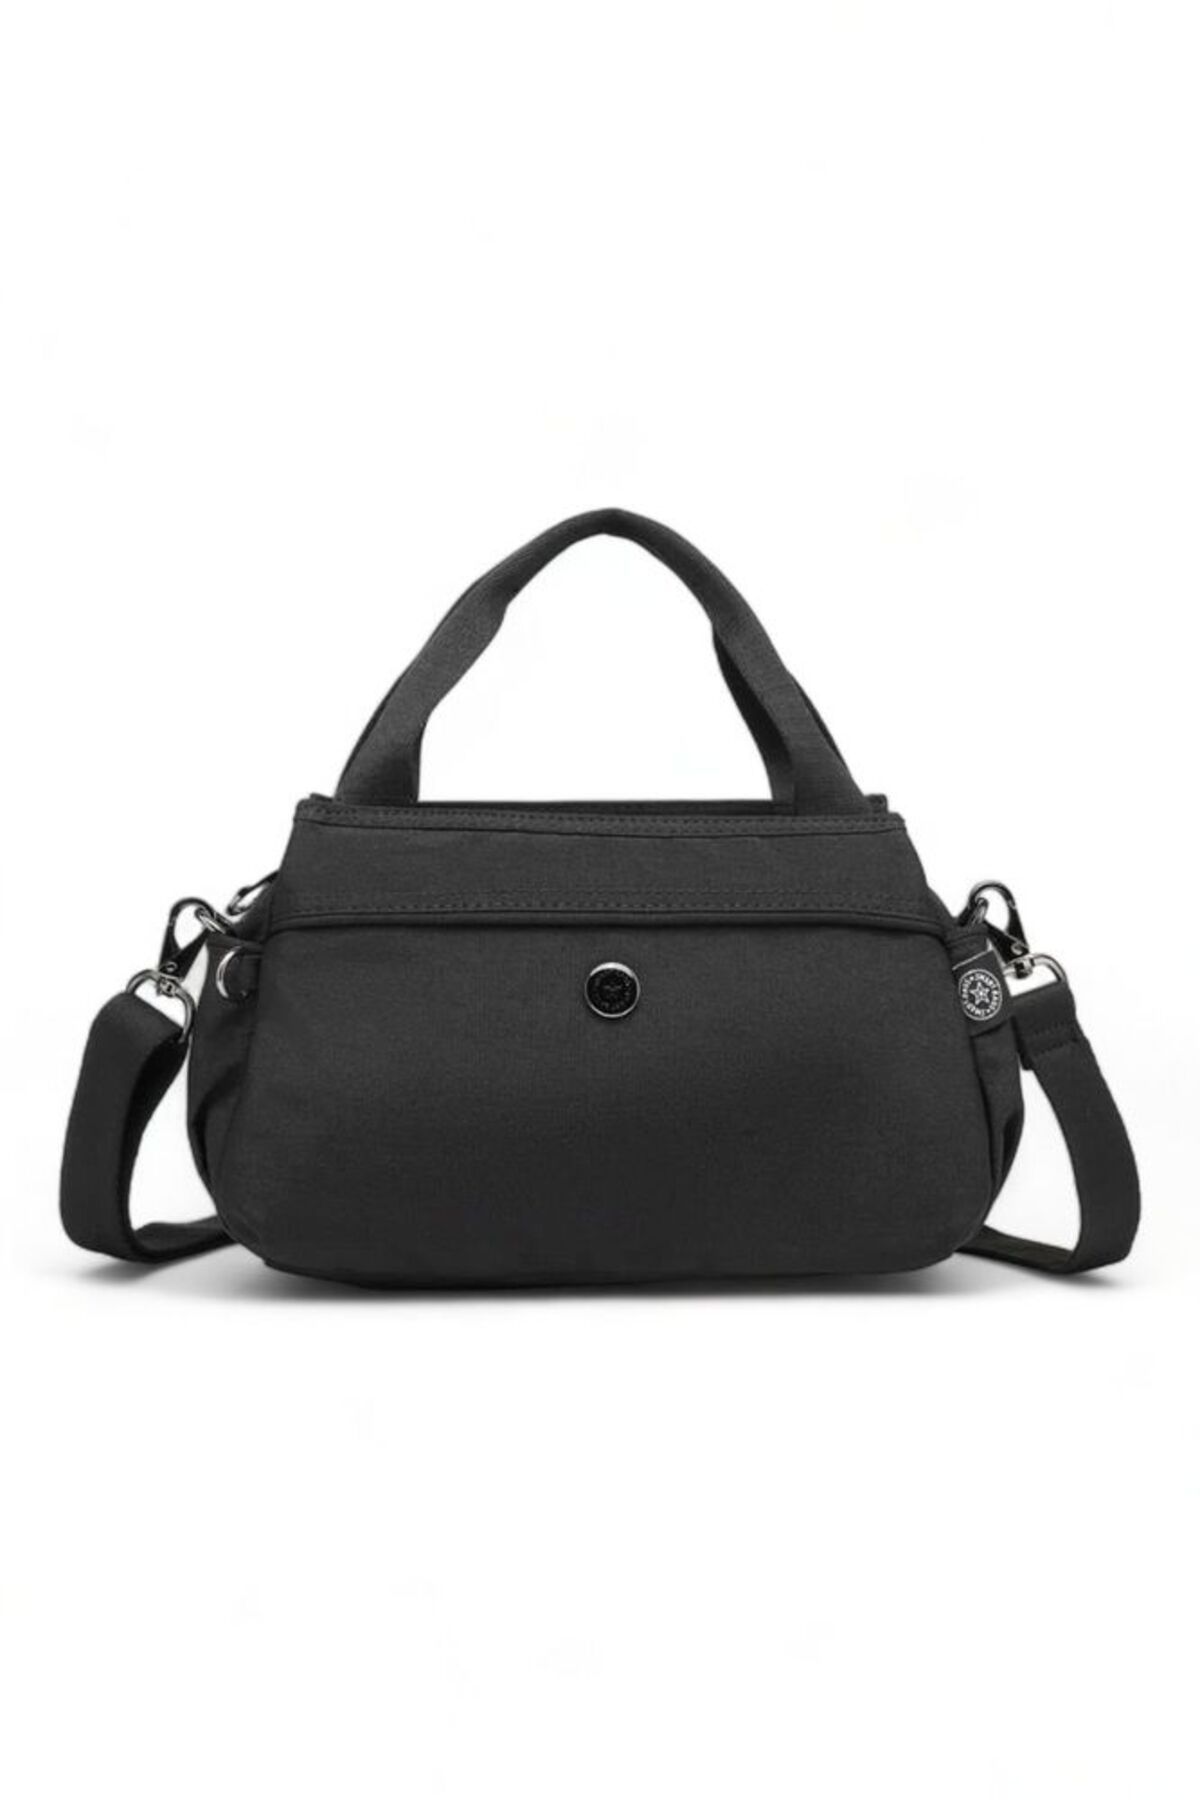 Smart Bags Krinkıl Siyah Kadın Çapraz Askılı Çanta Smb Mt-3128